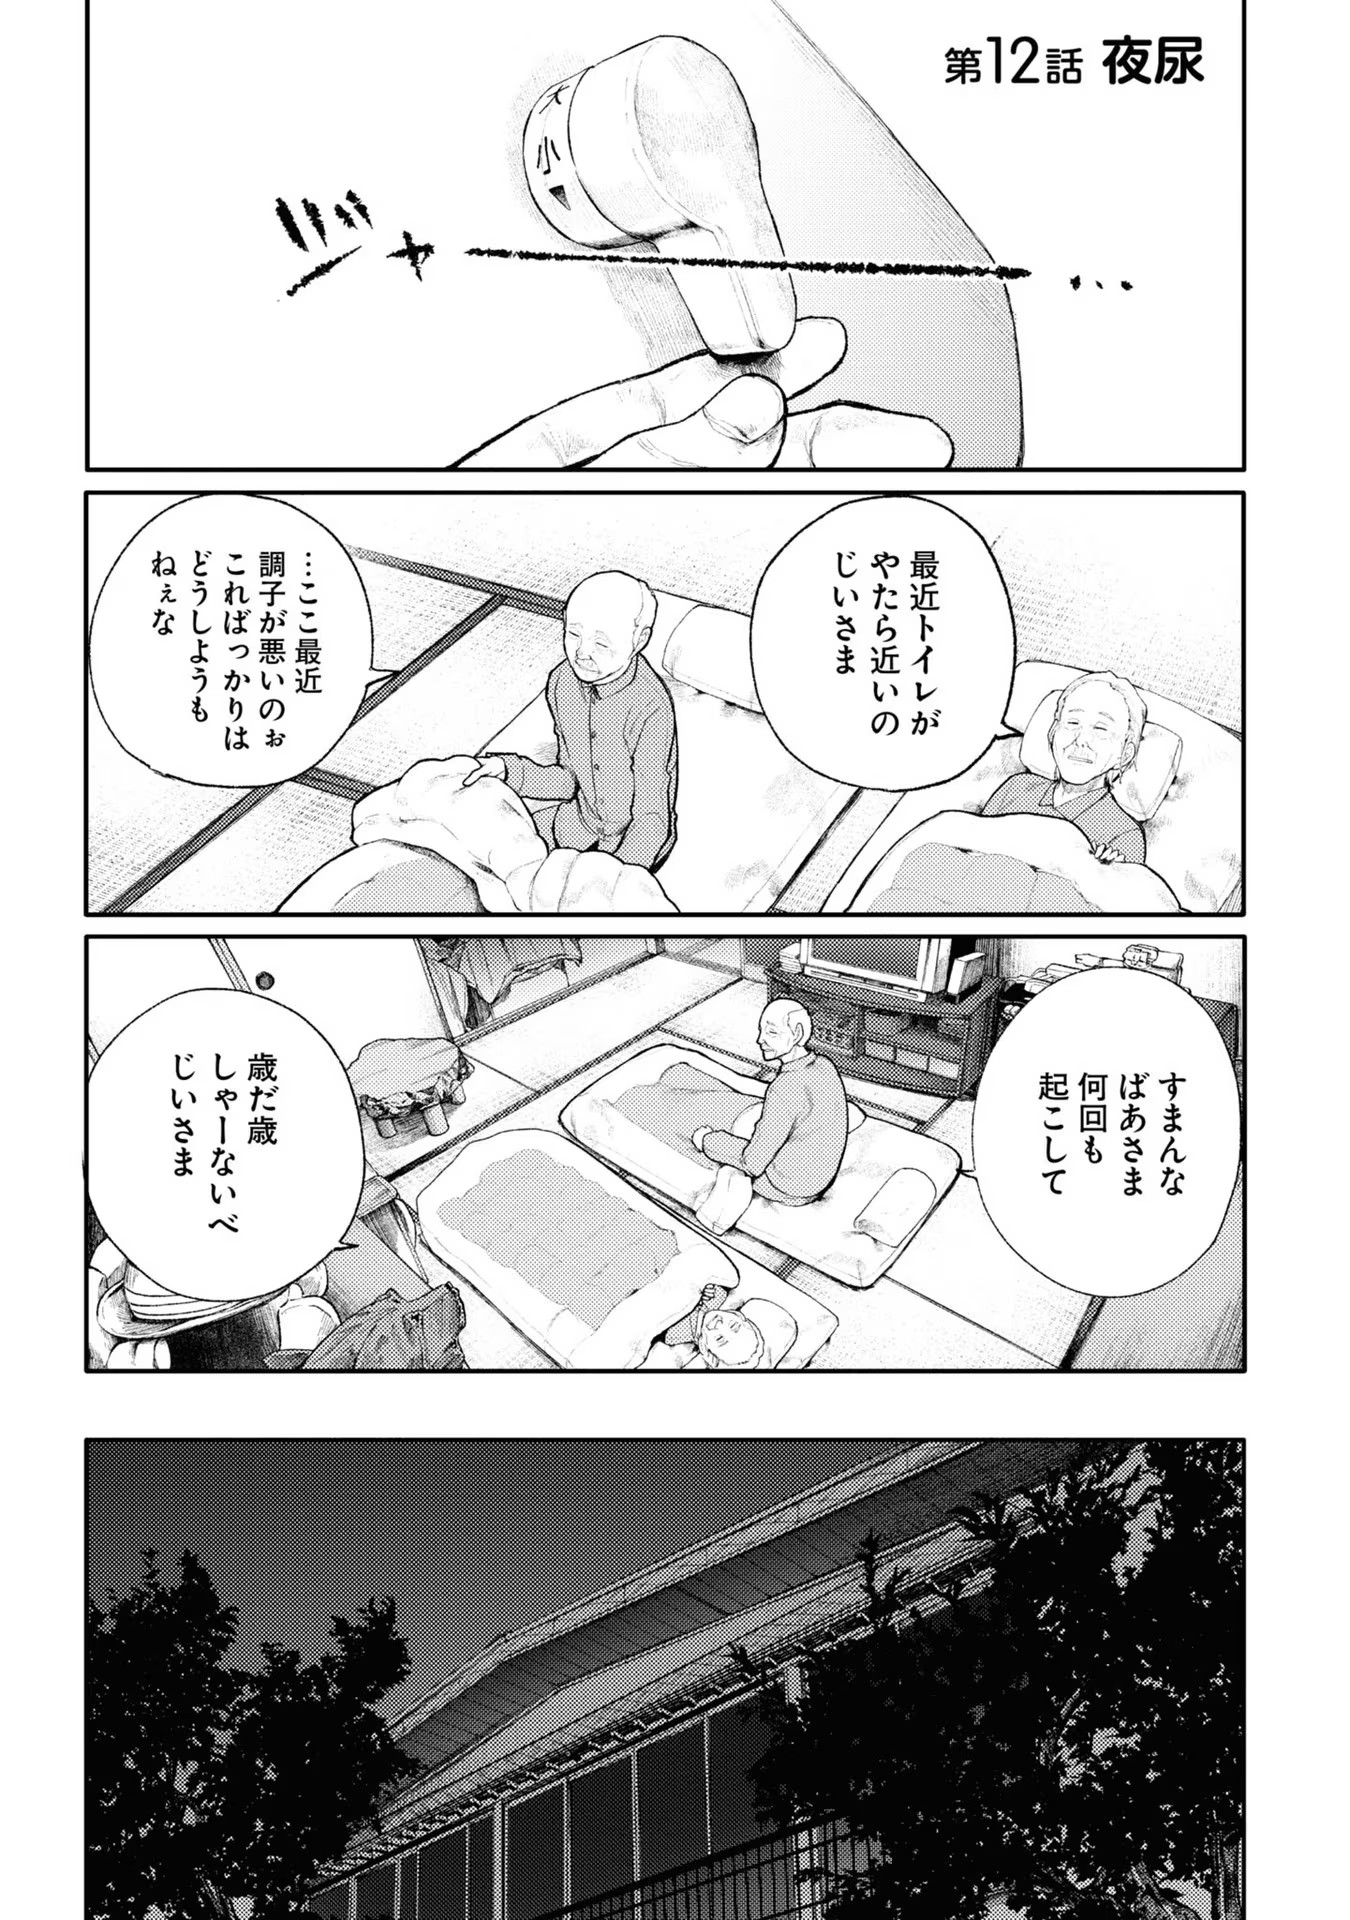 Ojii-san to Obaa-san ga Wakigaetta Hanashi - Chapter 12 - Page 1